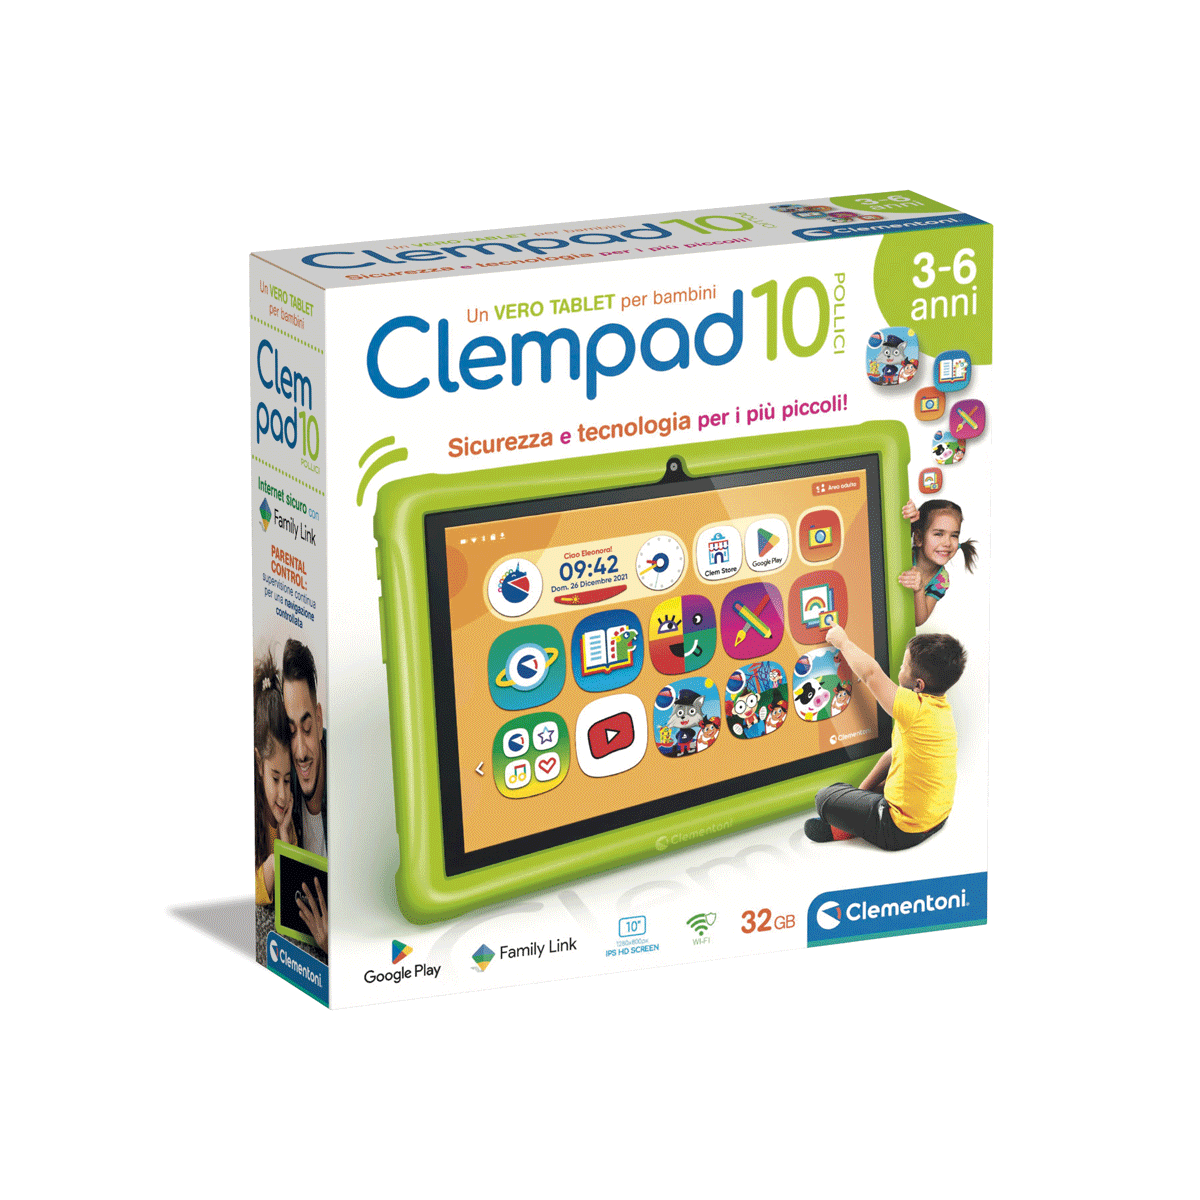 Clementoni - clempad 10' - tablet educativo 3-6 anni - 